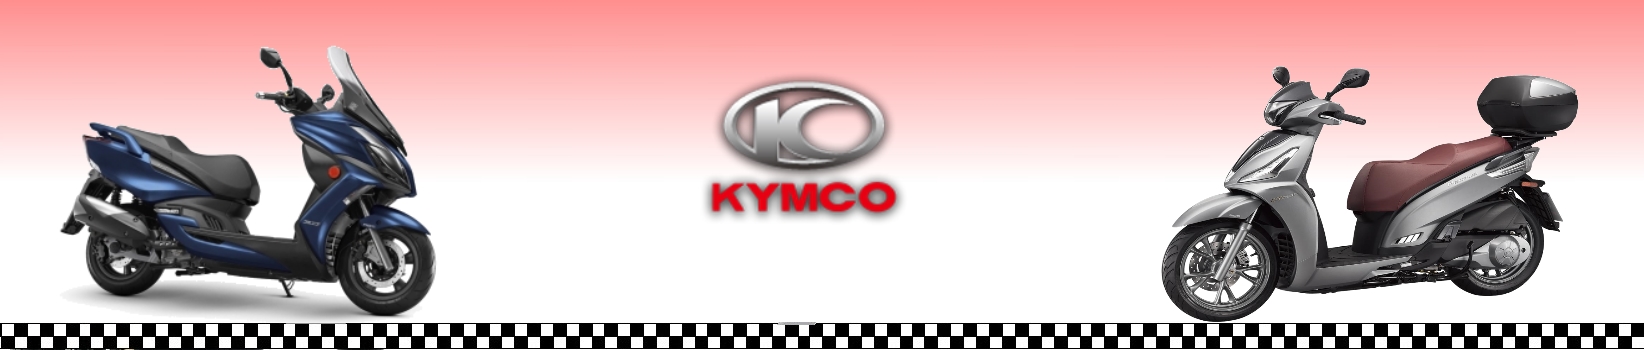 banner kymco